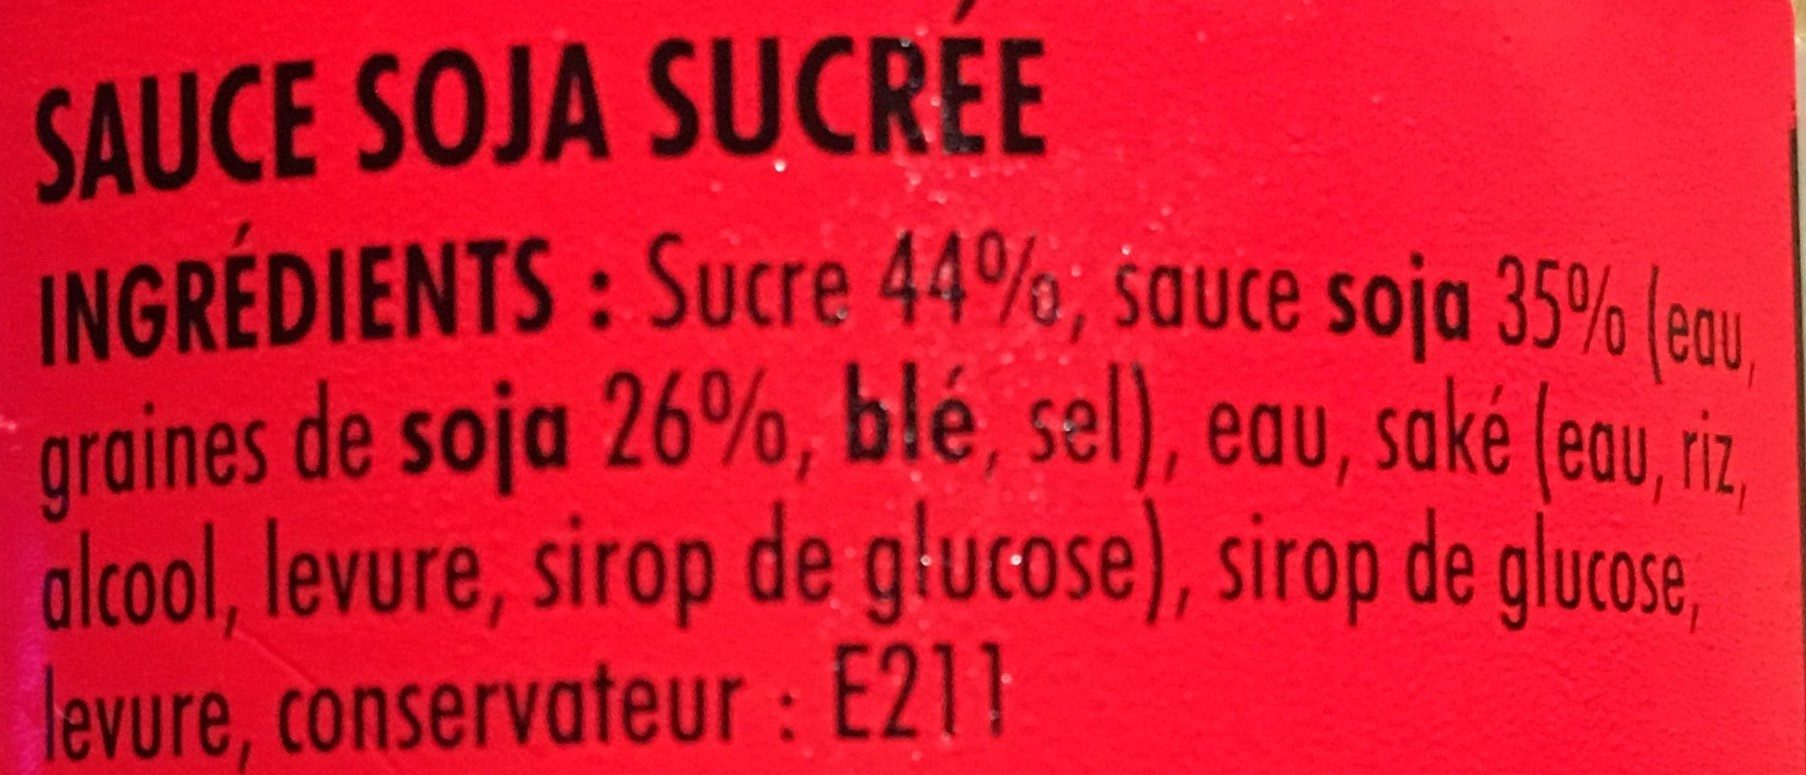 Saveur d'asie - sauce soja sucrée - Ingredientes - fr